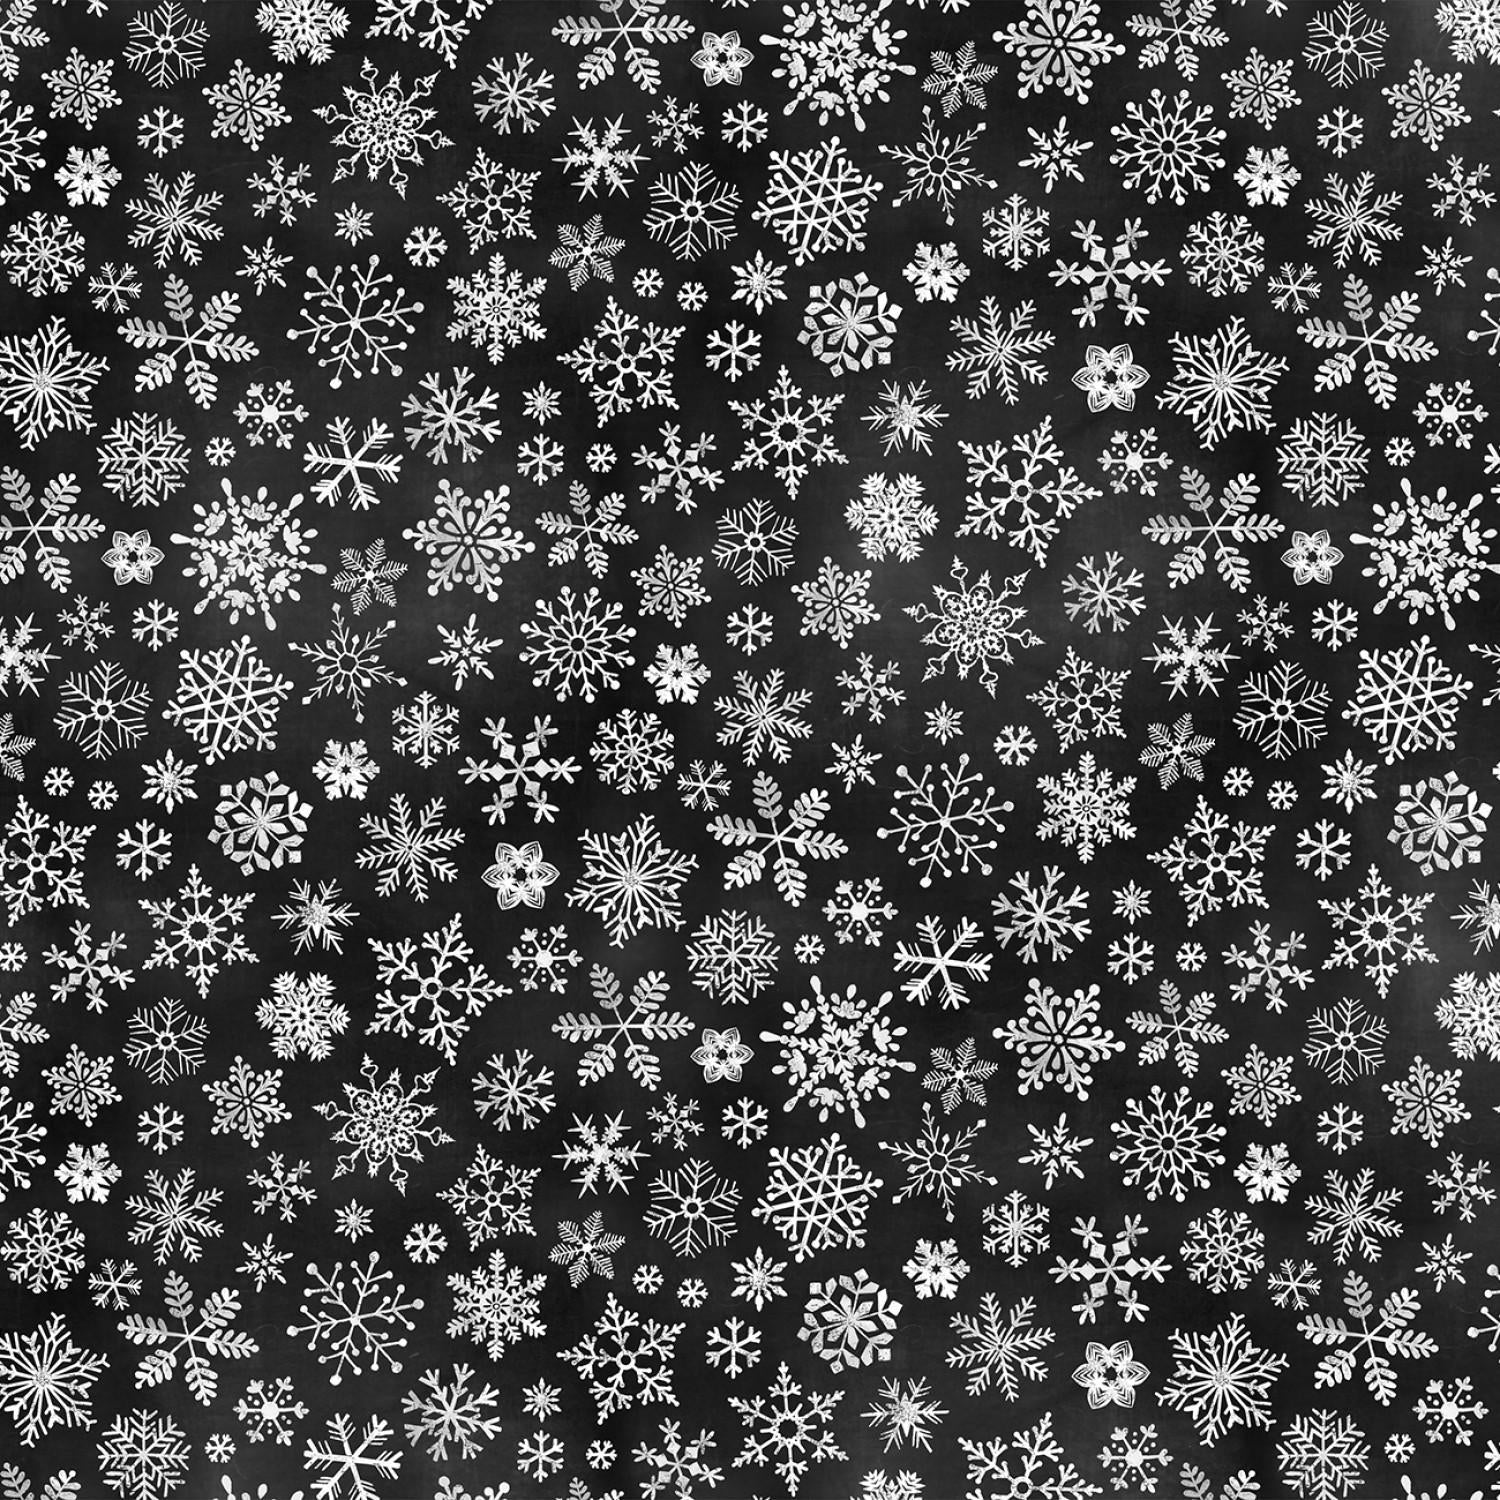 O Holy Night - Chalkboard Snowflakes - CD1483-Black